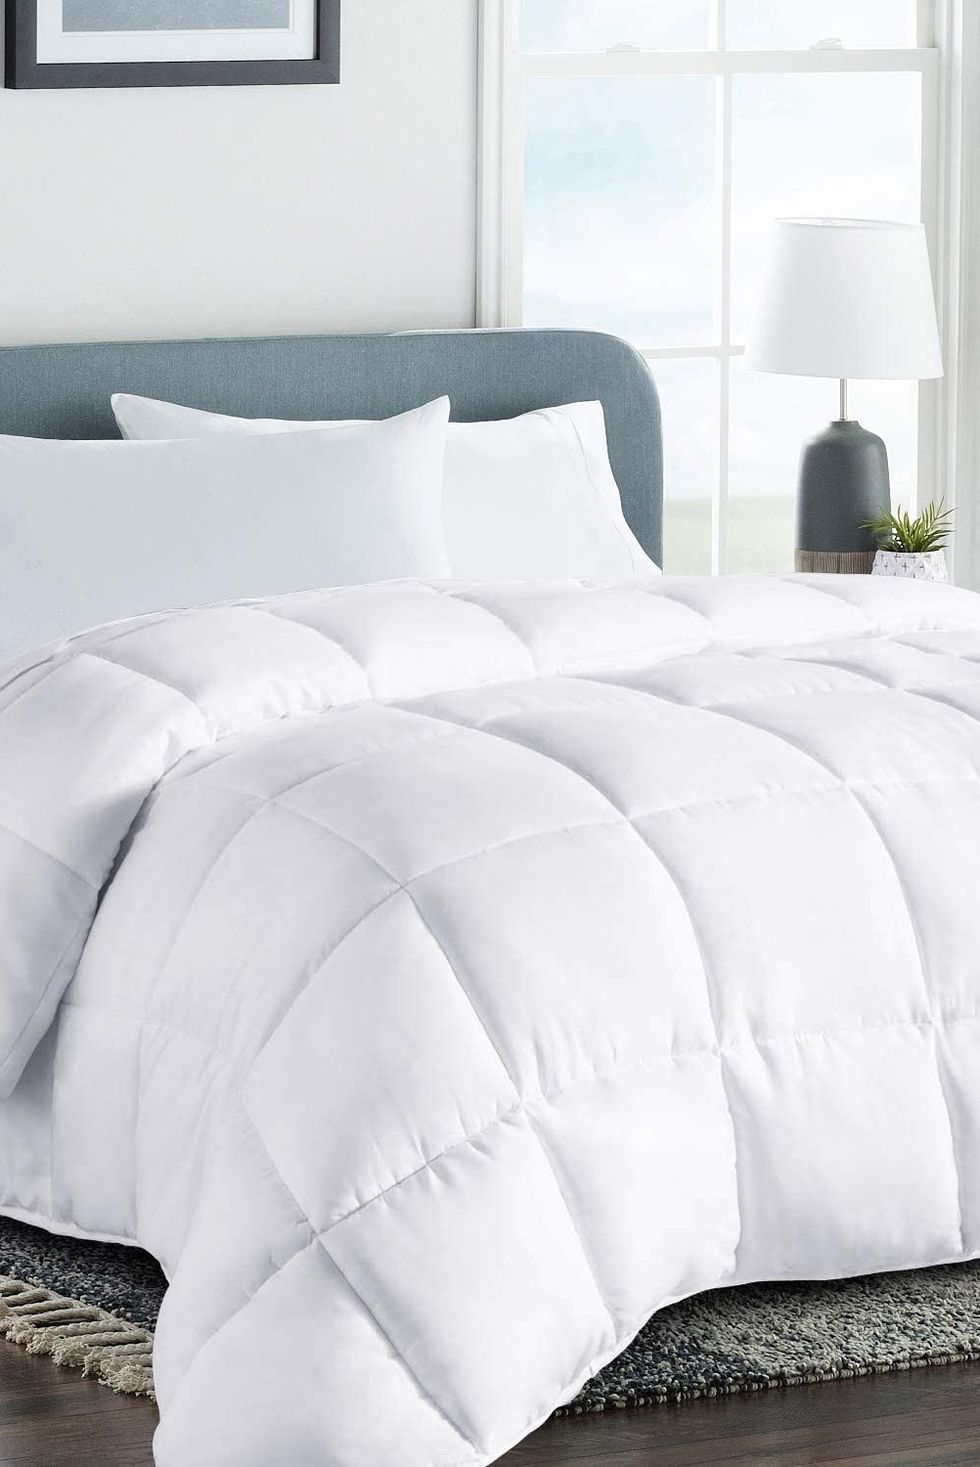 2100 Series Cooling Comforter 